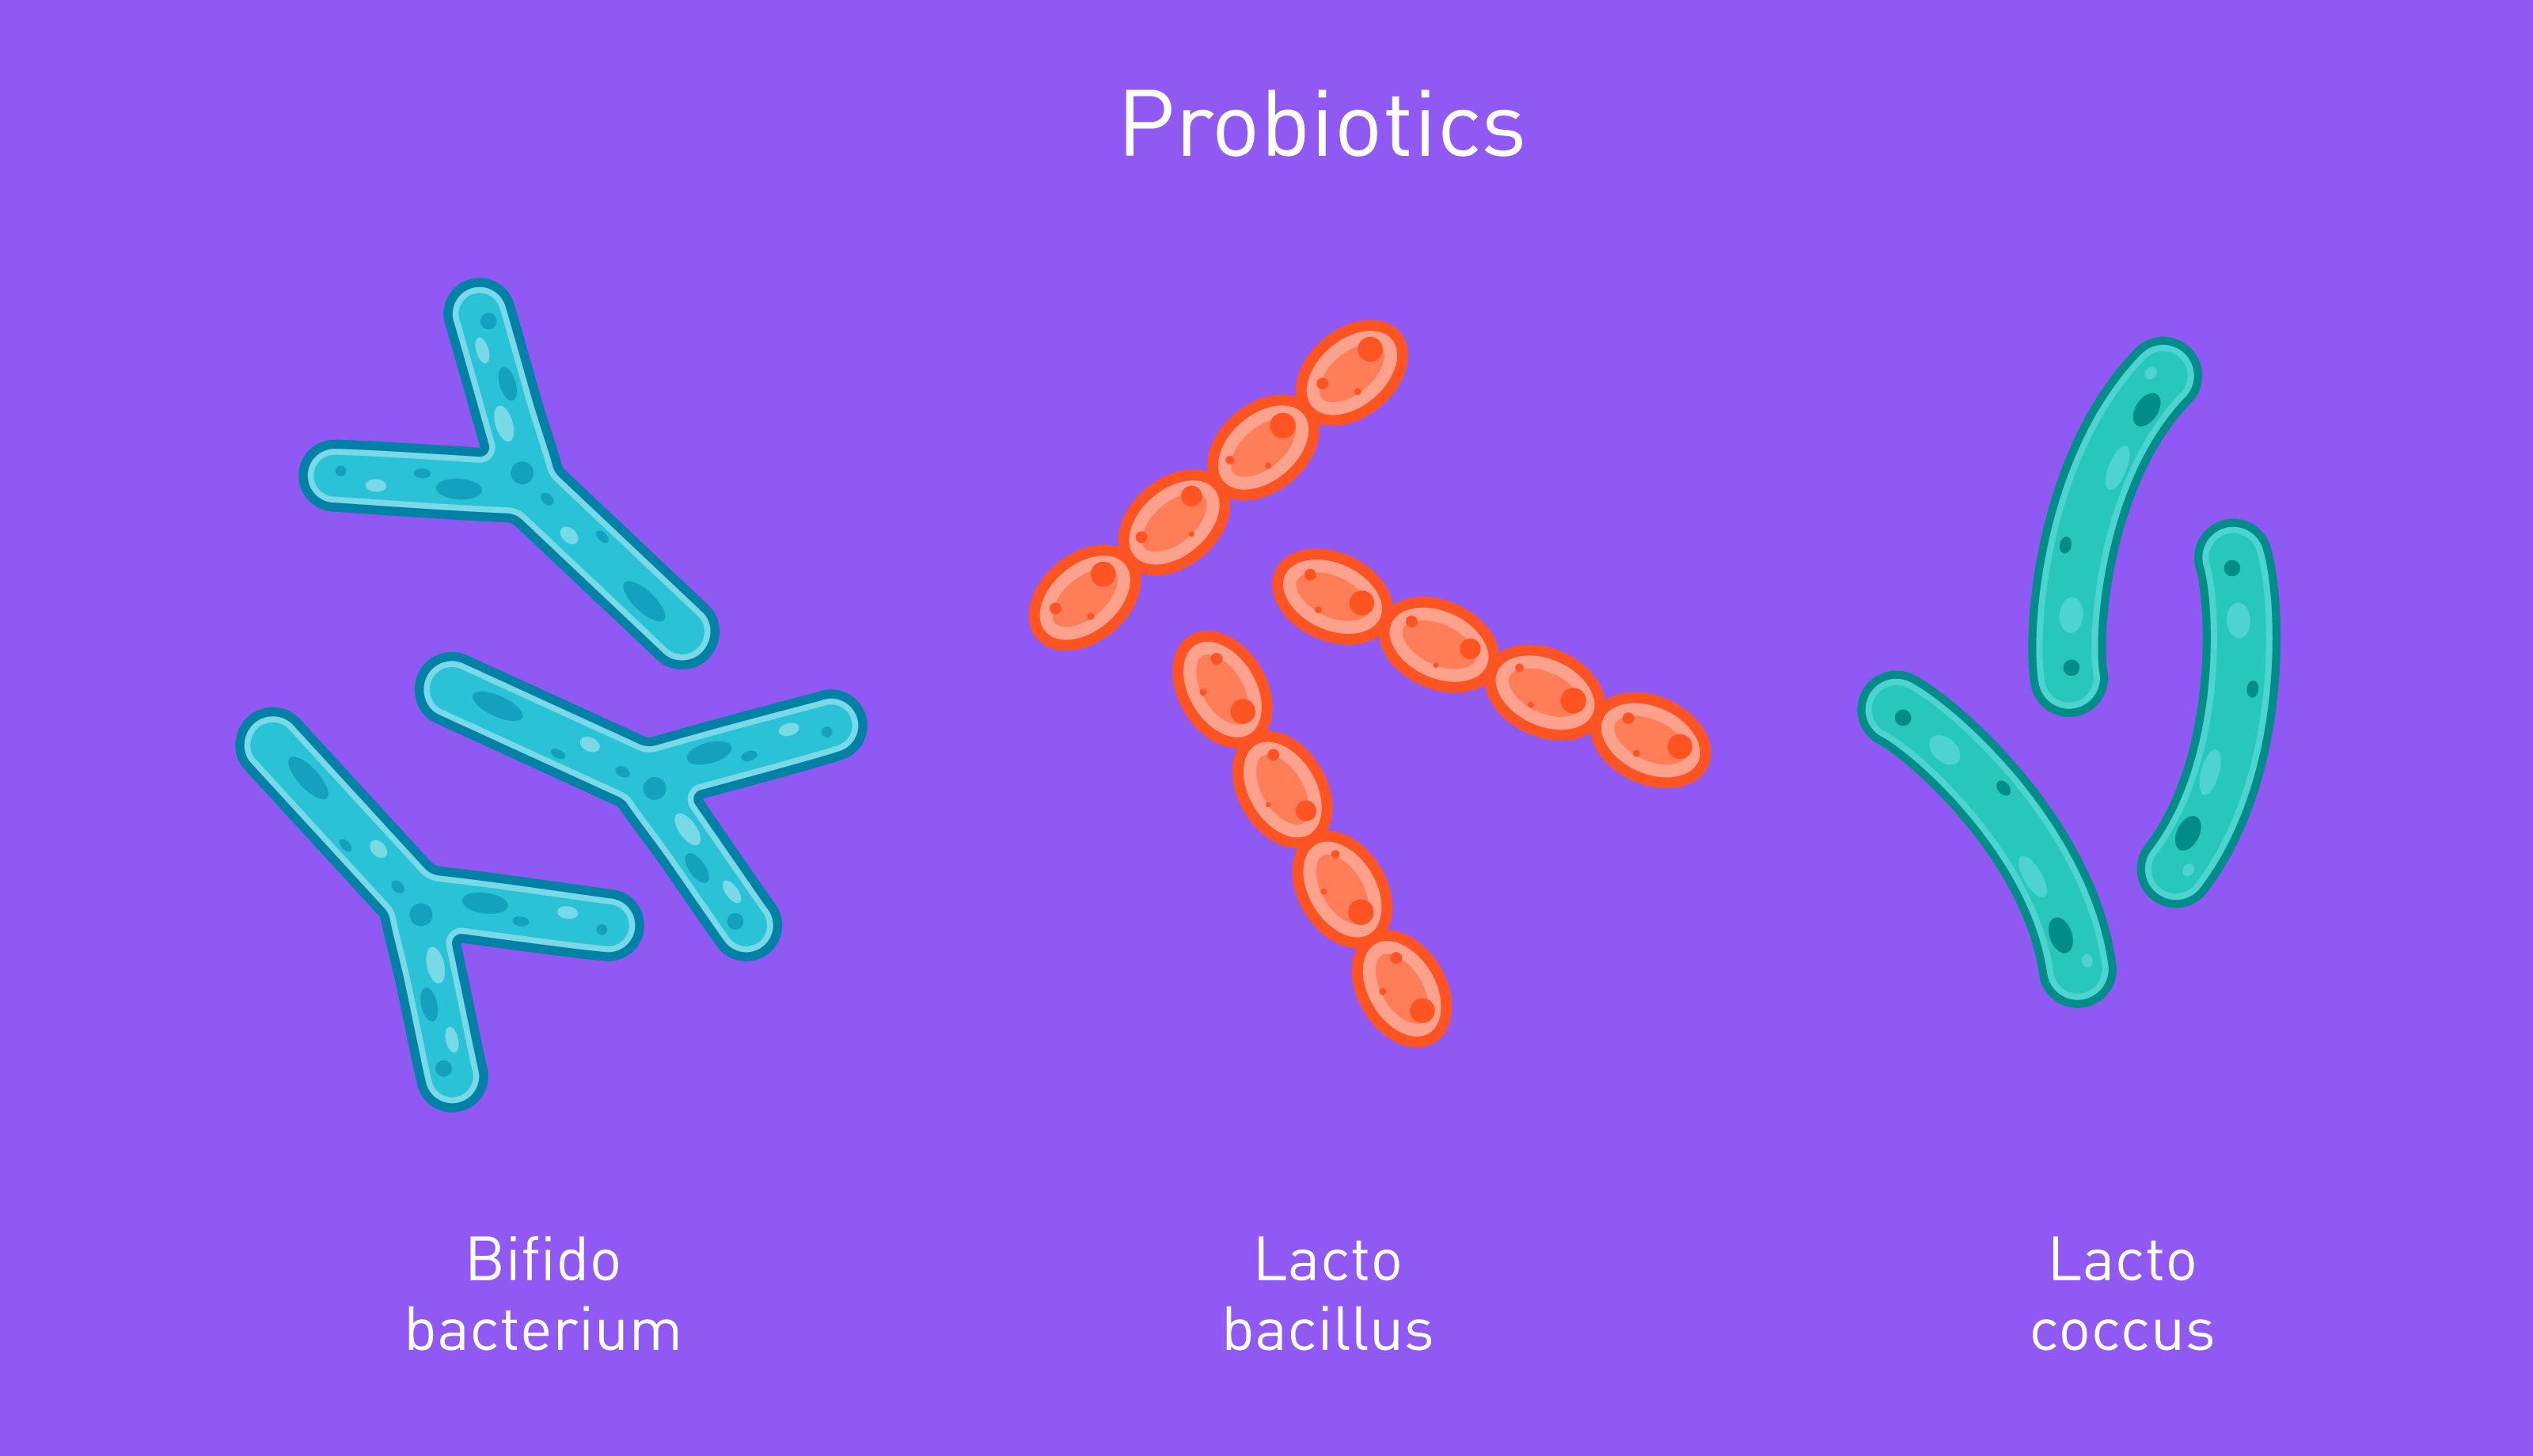 Probiotics combat the effects of antibiotics on good gut bacteria